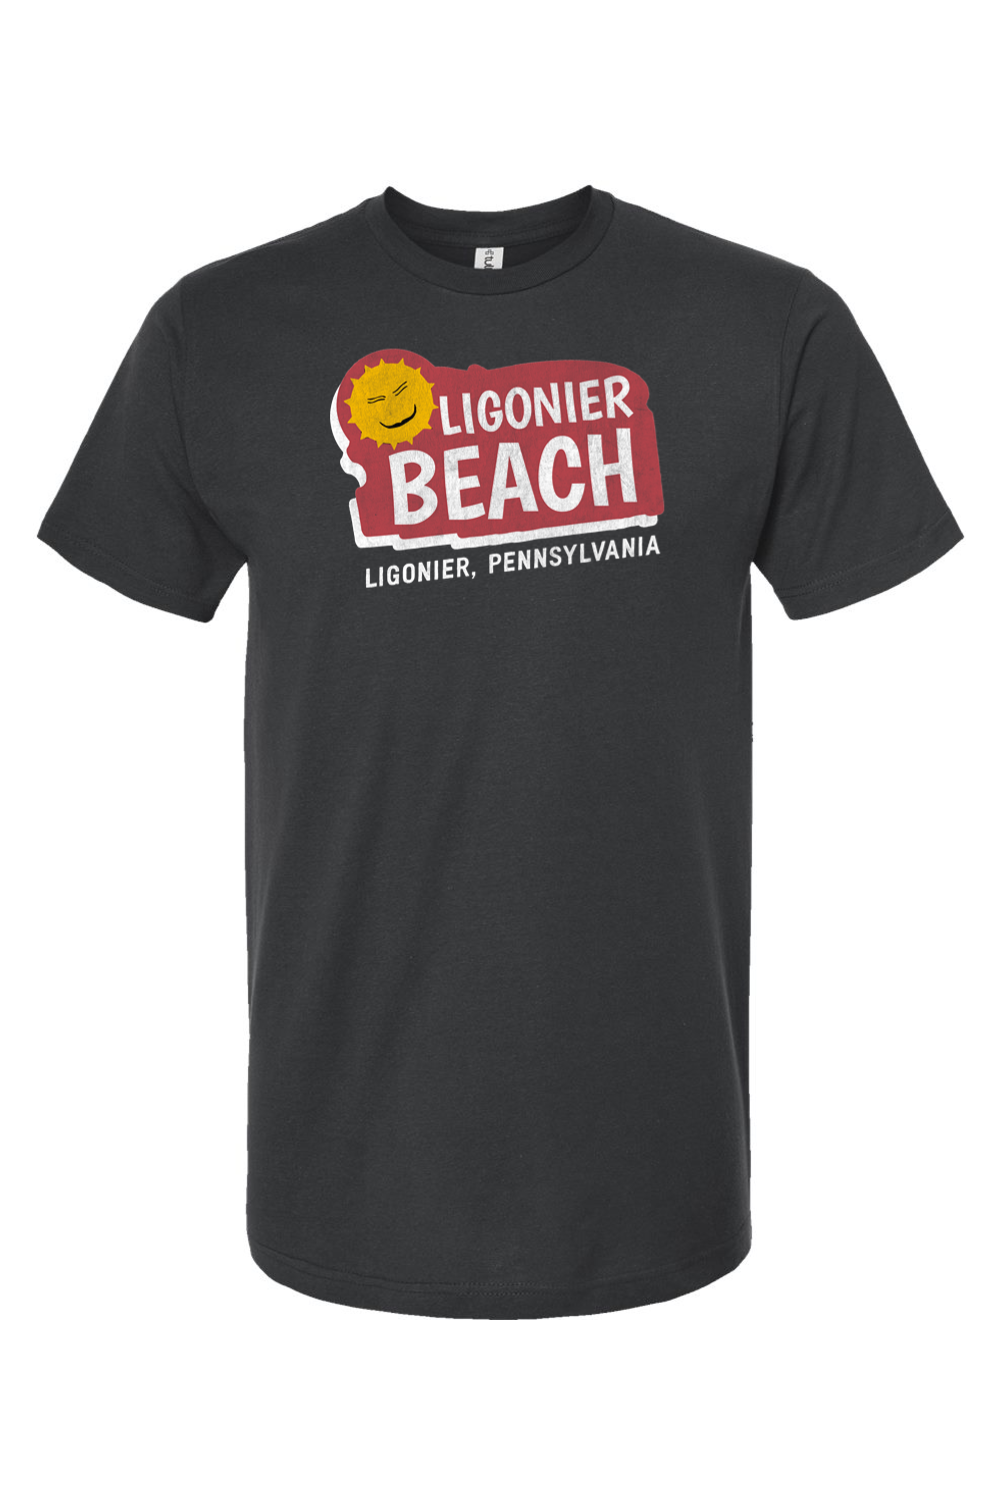 Ligonier Beach - Ligonier, PA - Yinzylvania